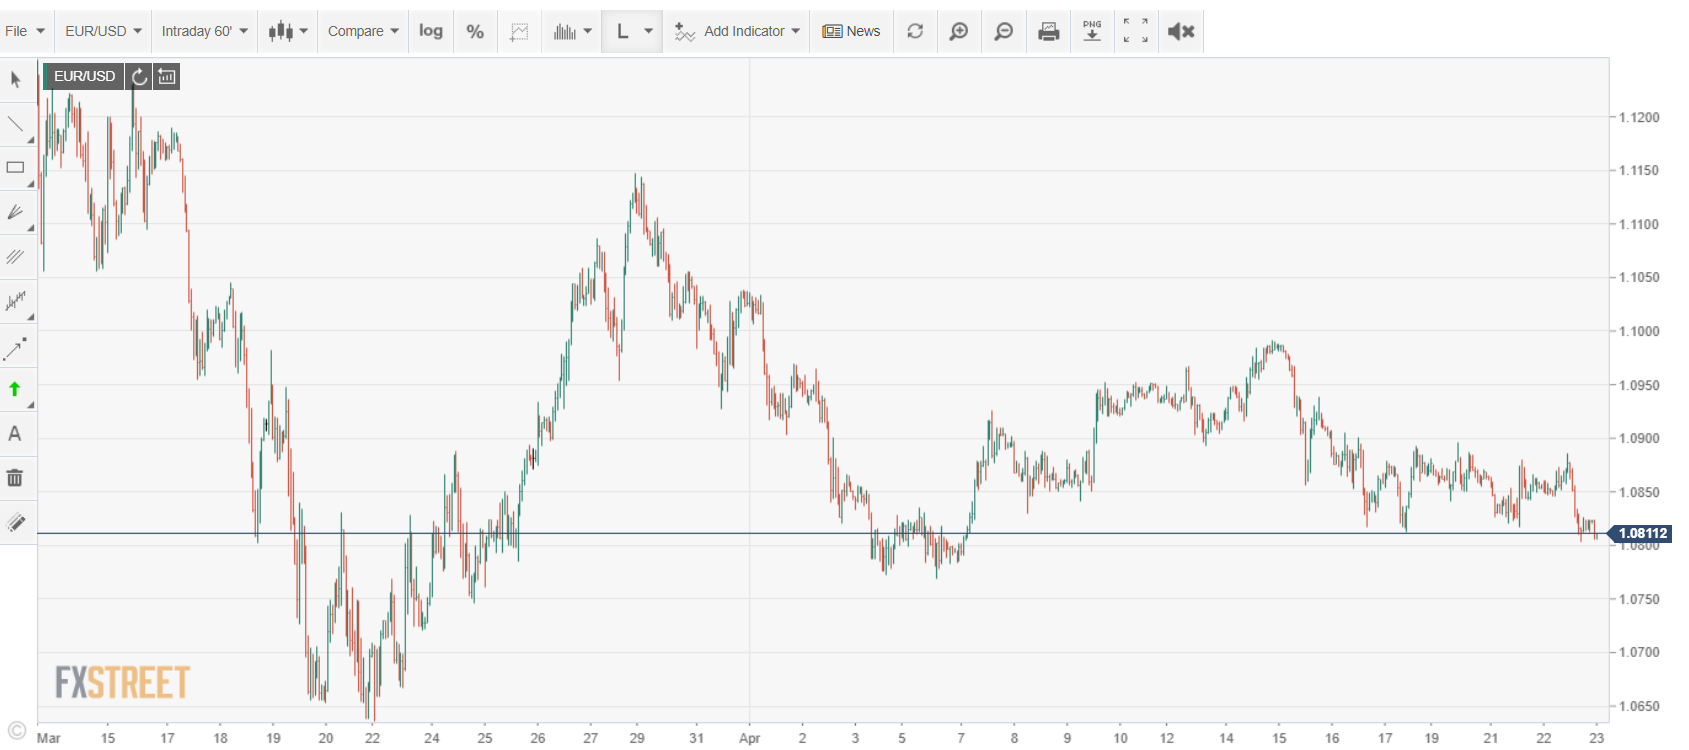 FX Street EUR USD Intraday Chart - 23 April 2020